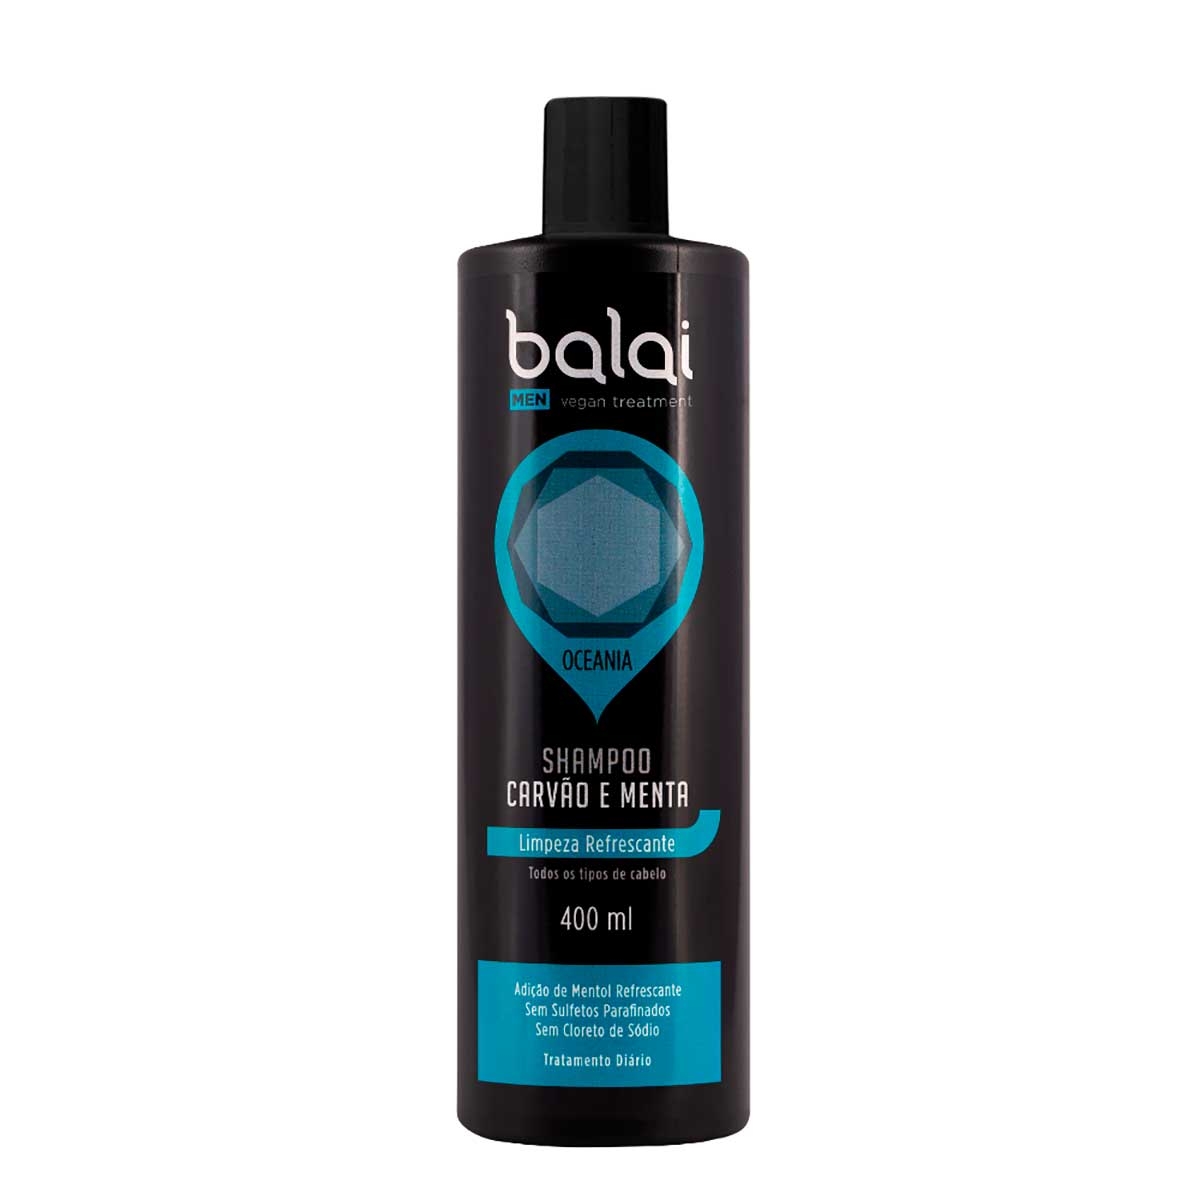 Shampoo Balai Oceania Limpeza Refrescante com 400ml 400ml